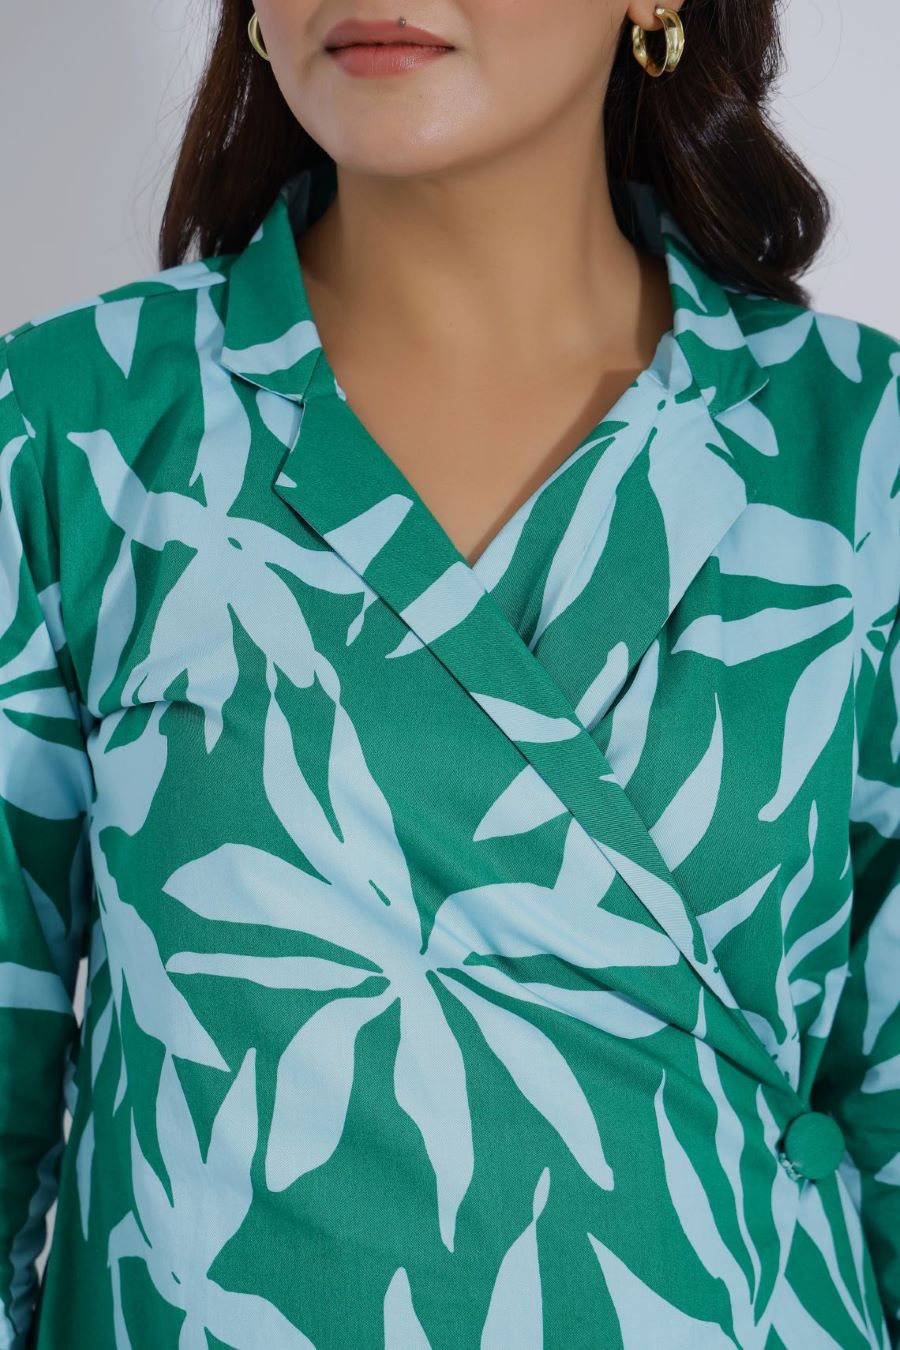 Green Blazer Dress for Women in Leaf Print